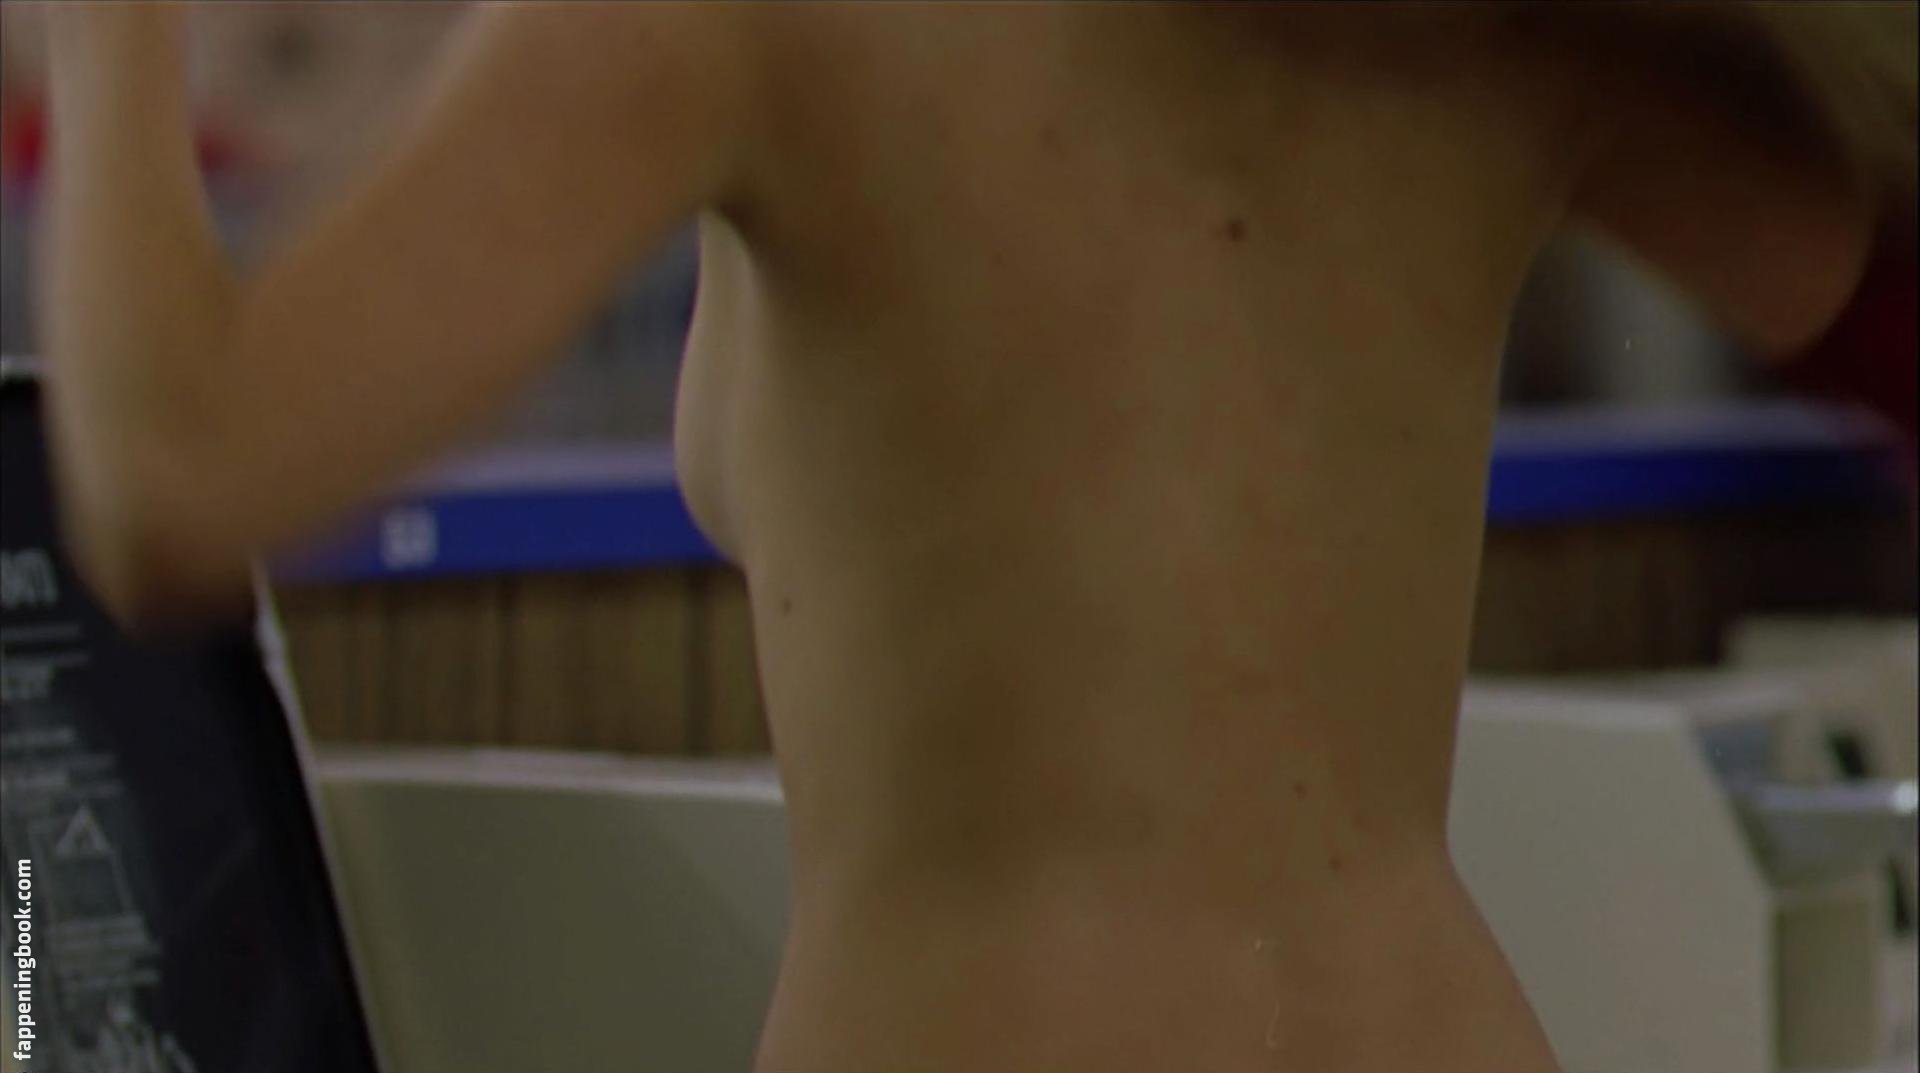 Marisa coughlan topless